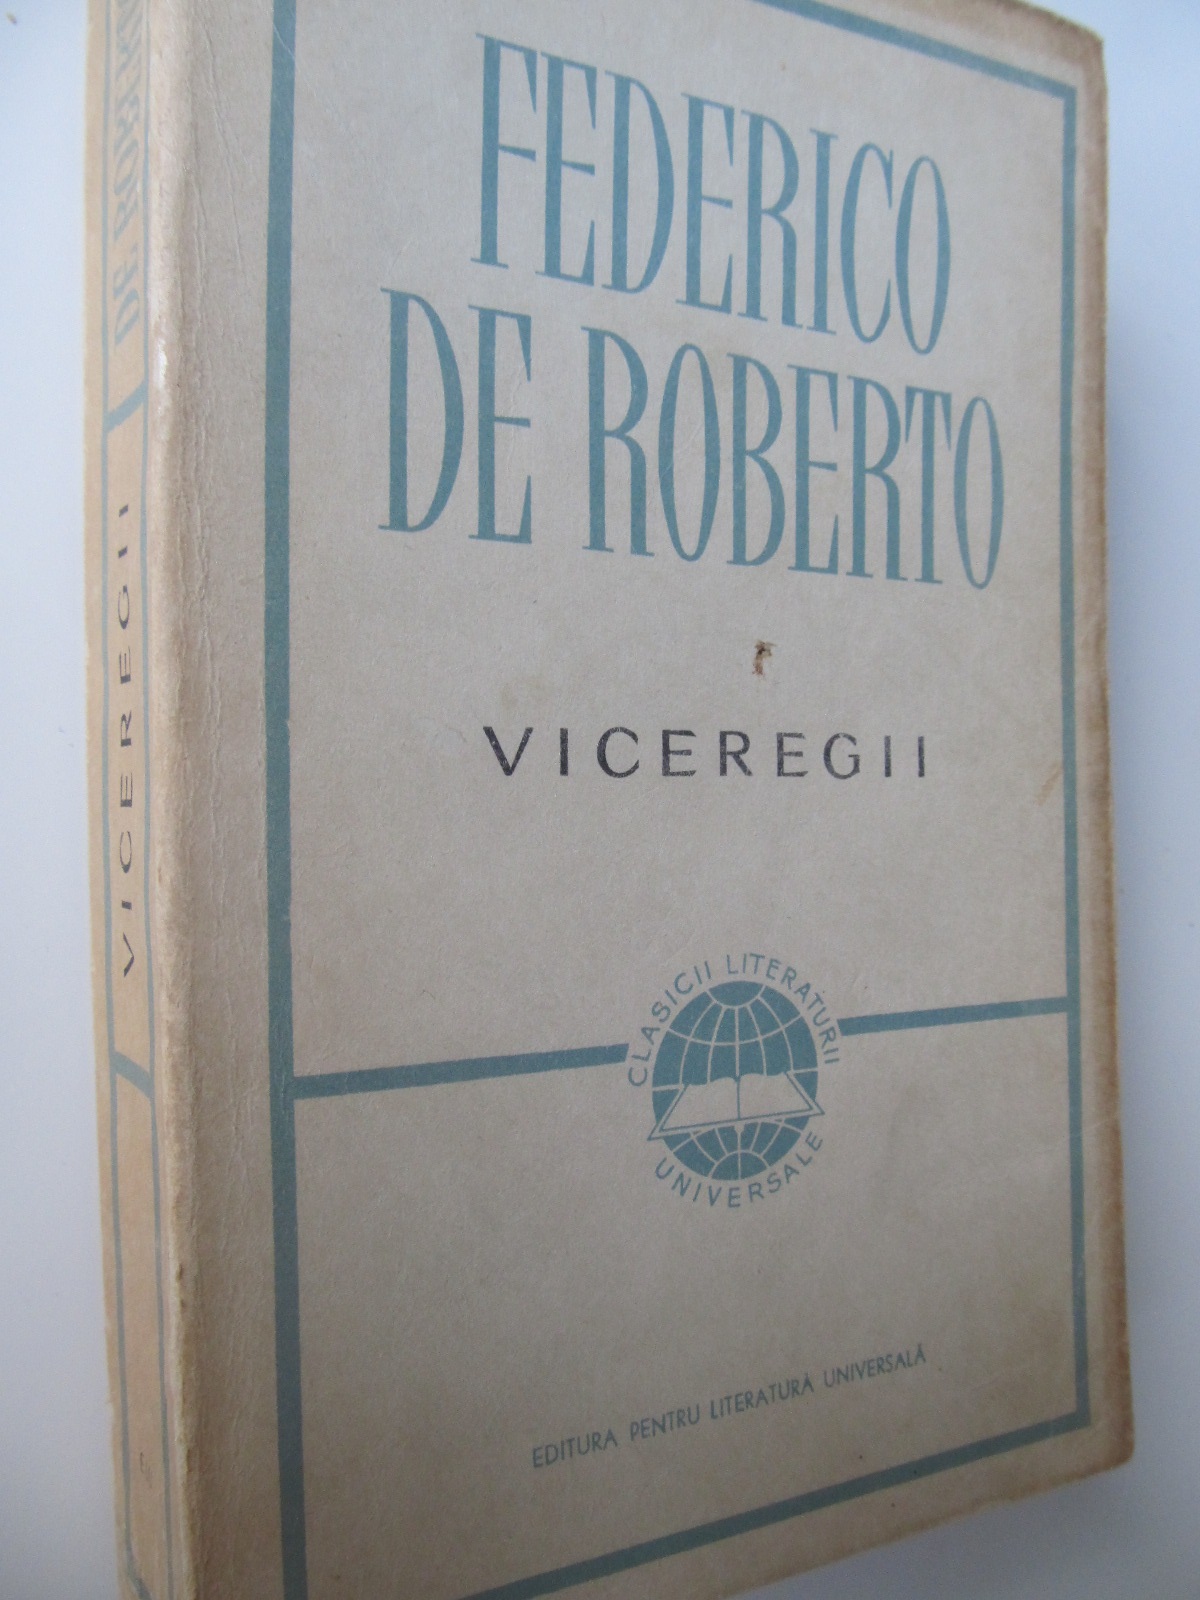 Viceregii - Federico de Roberto | Detalii carte